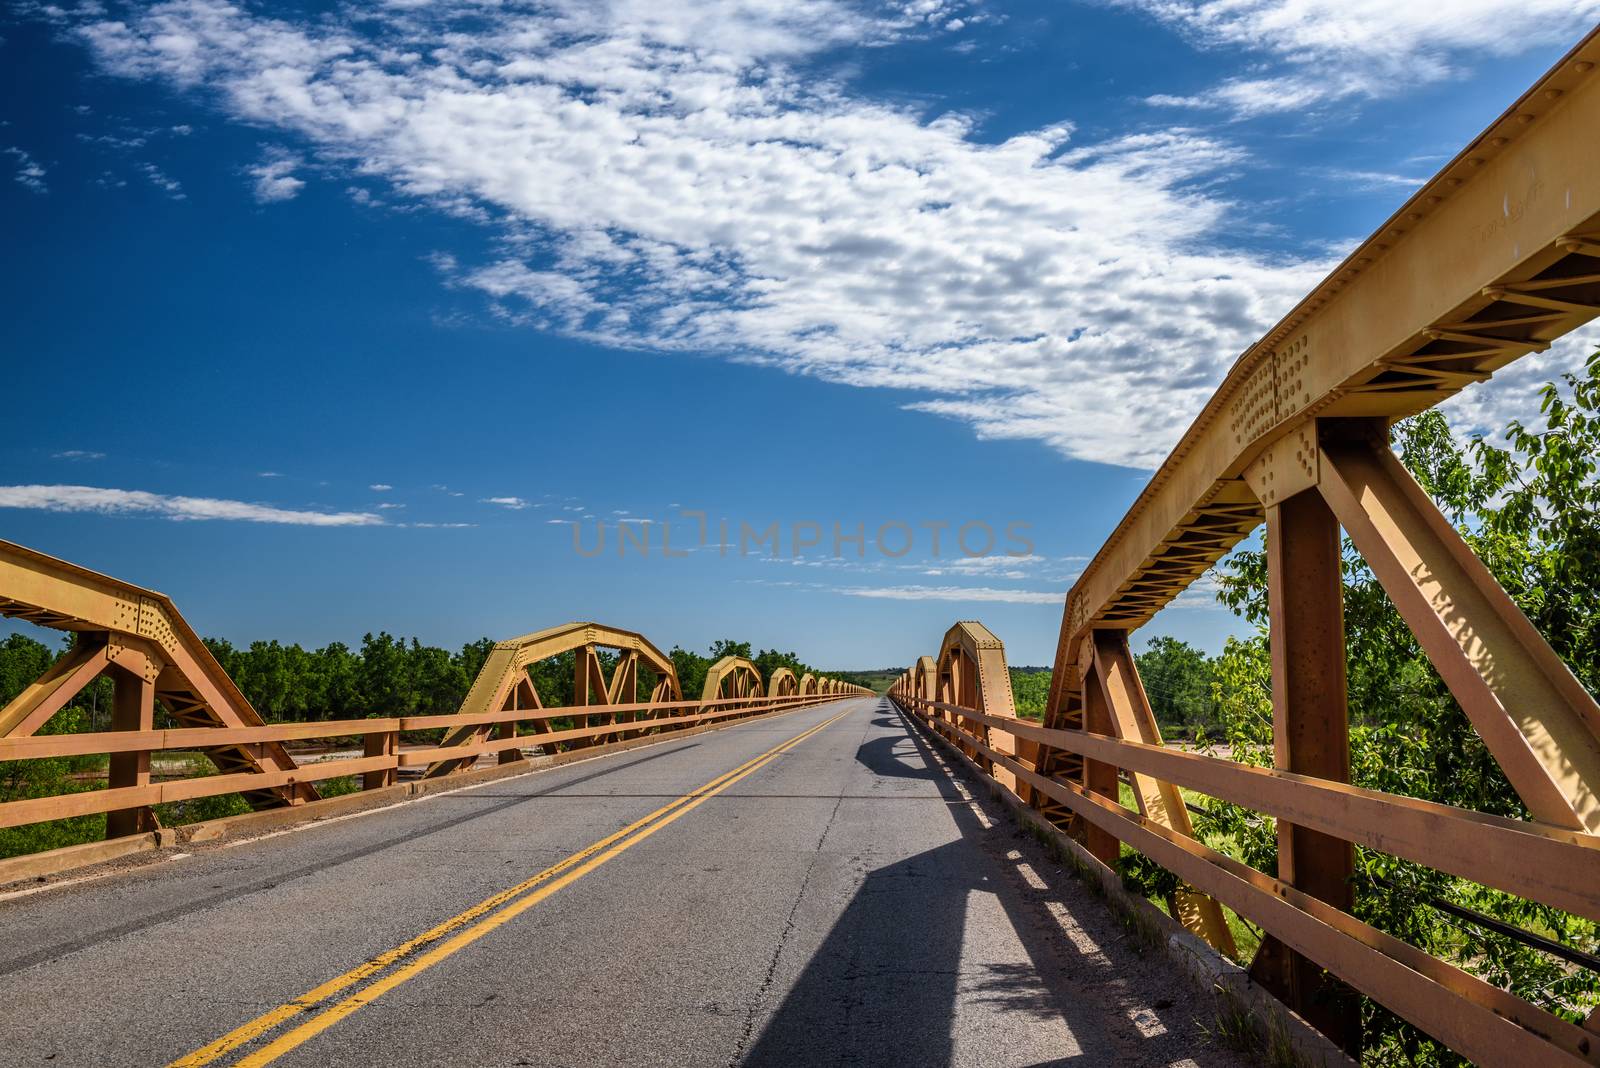 Pony Bridge on route 66 in Oklahoma by nickfox